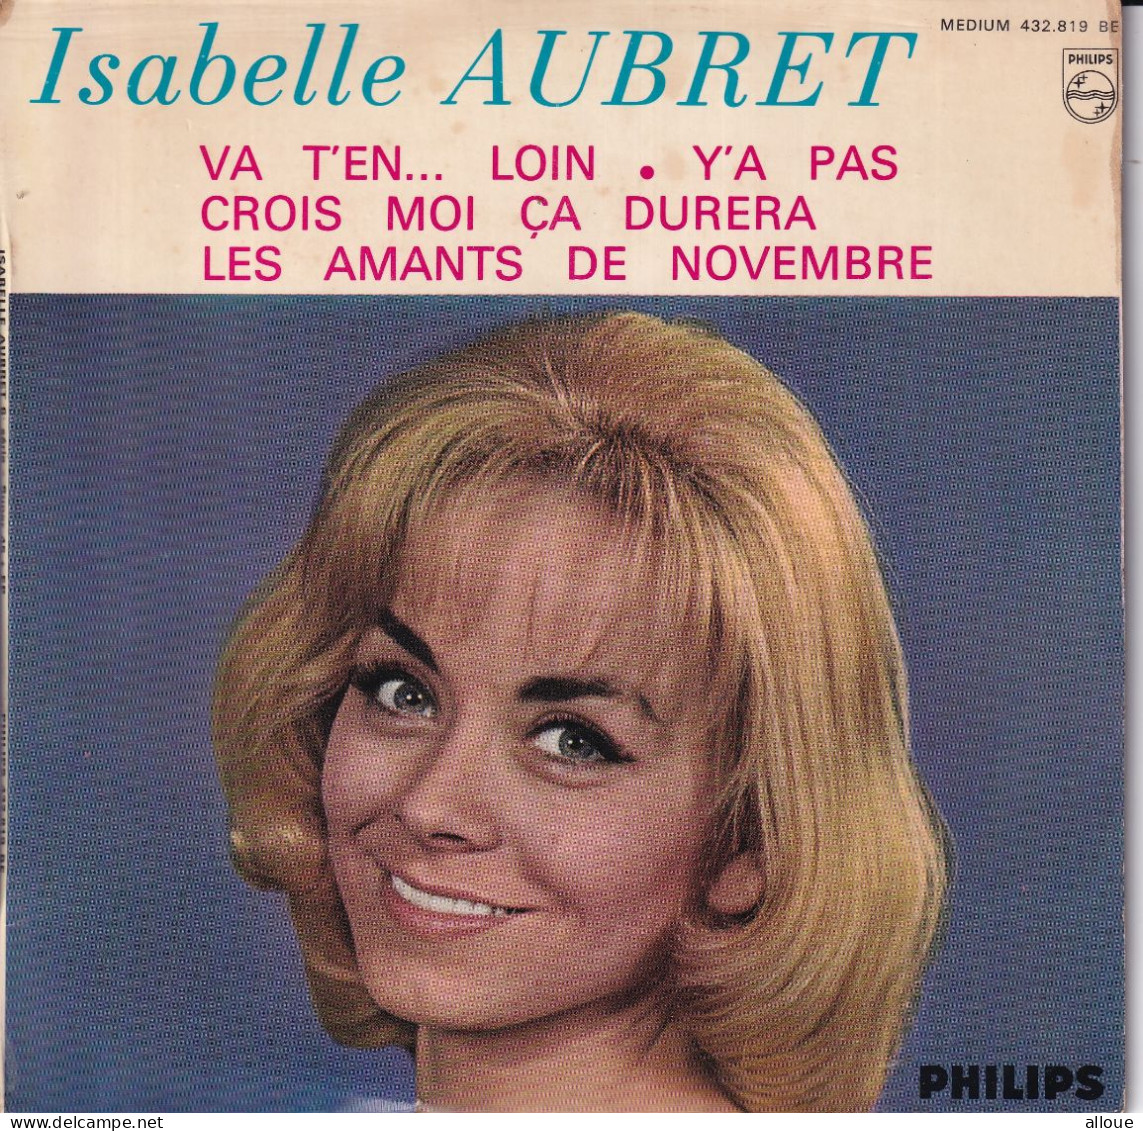 ISABELLE AUBRET - FR EP - VA T'EN... LOIN + 3 - Otros - Canción Francesa